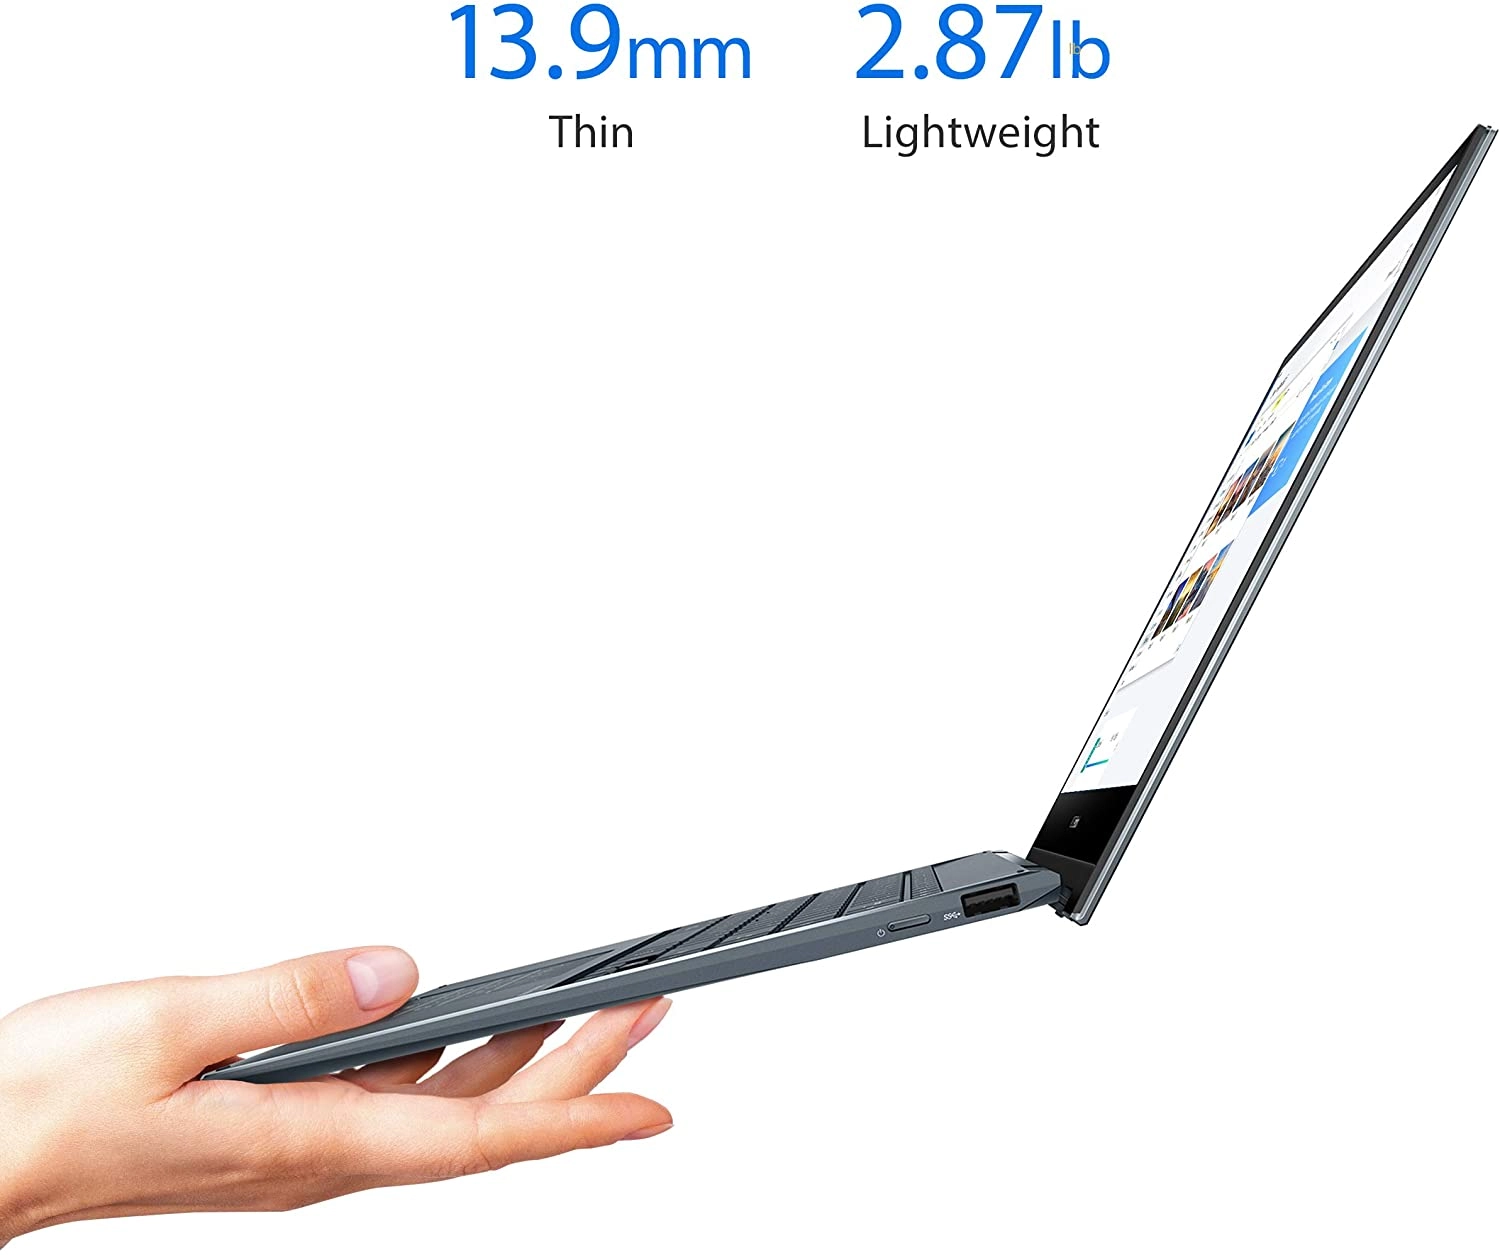 Asus ZenBook Flip 13 laptop image